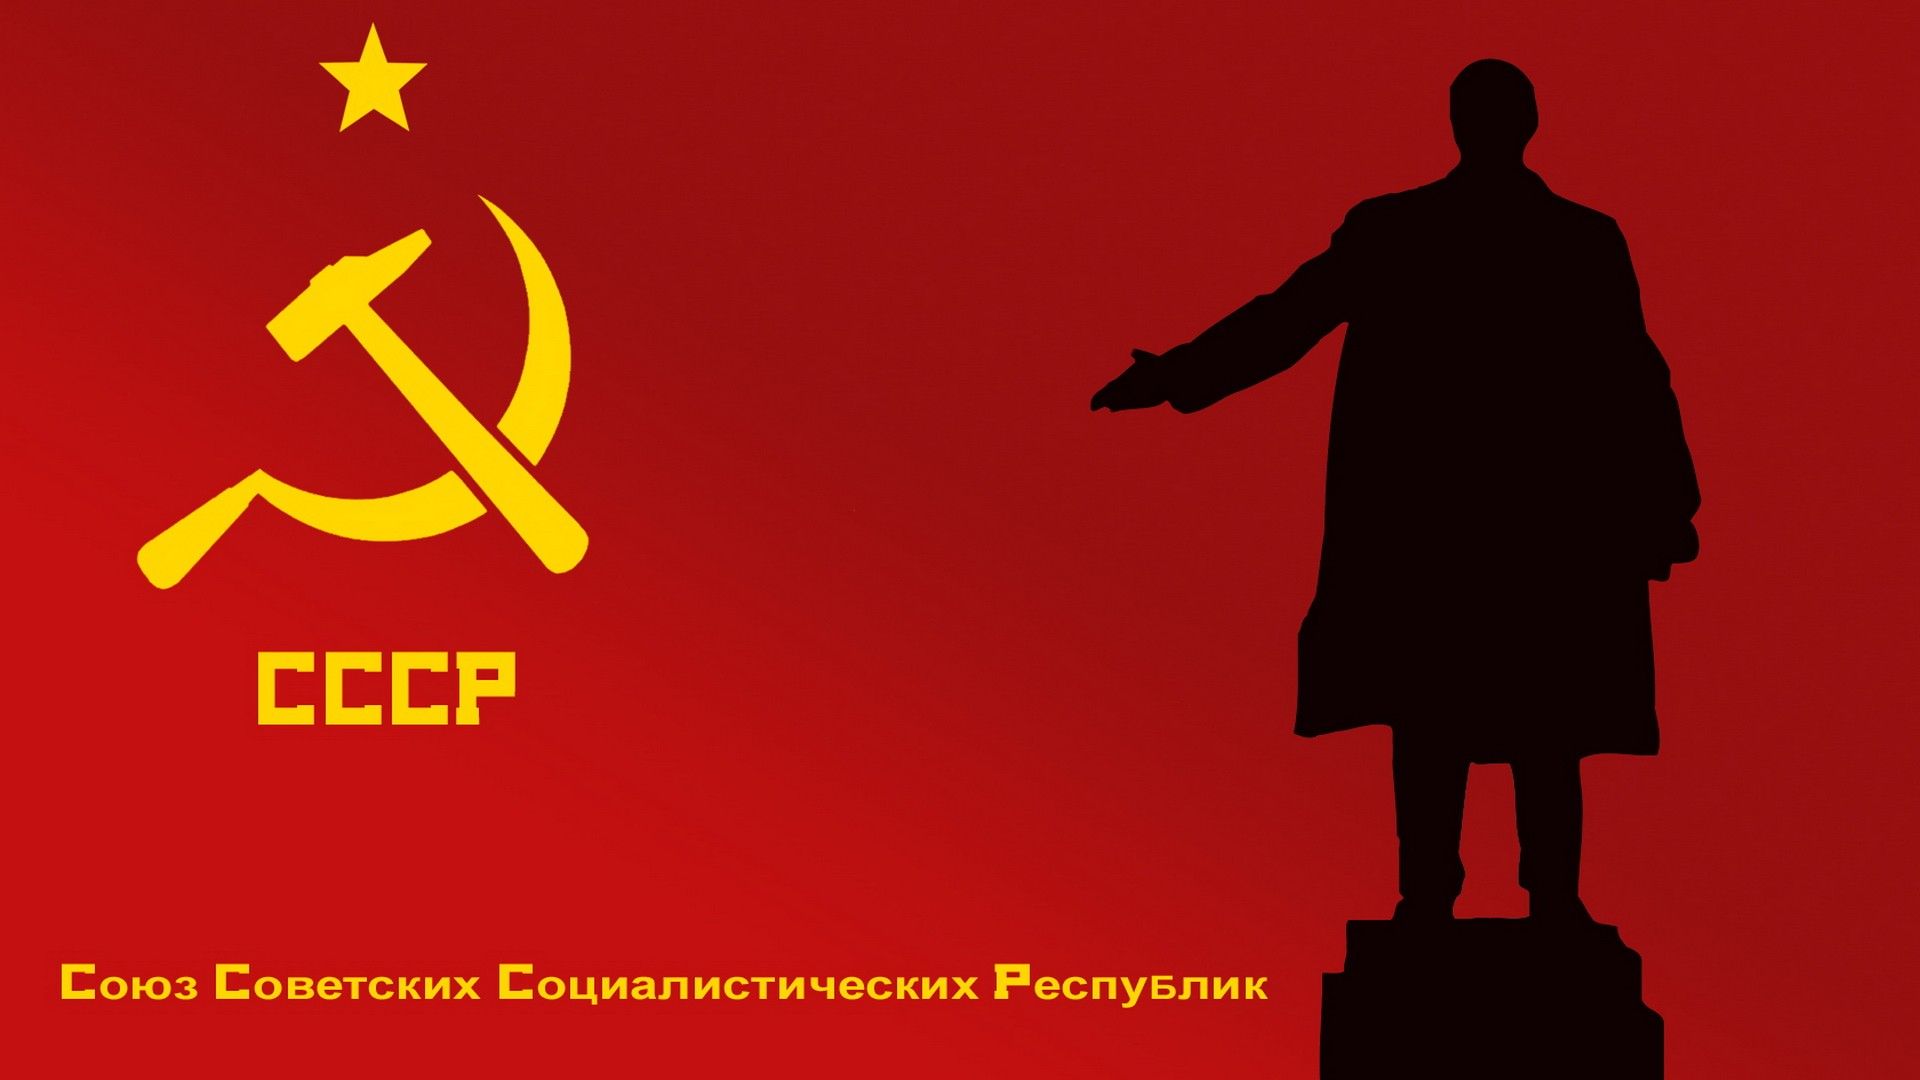 Communism Wallpapers - 794ov8u - HD Wallpaper 